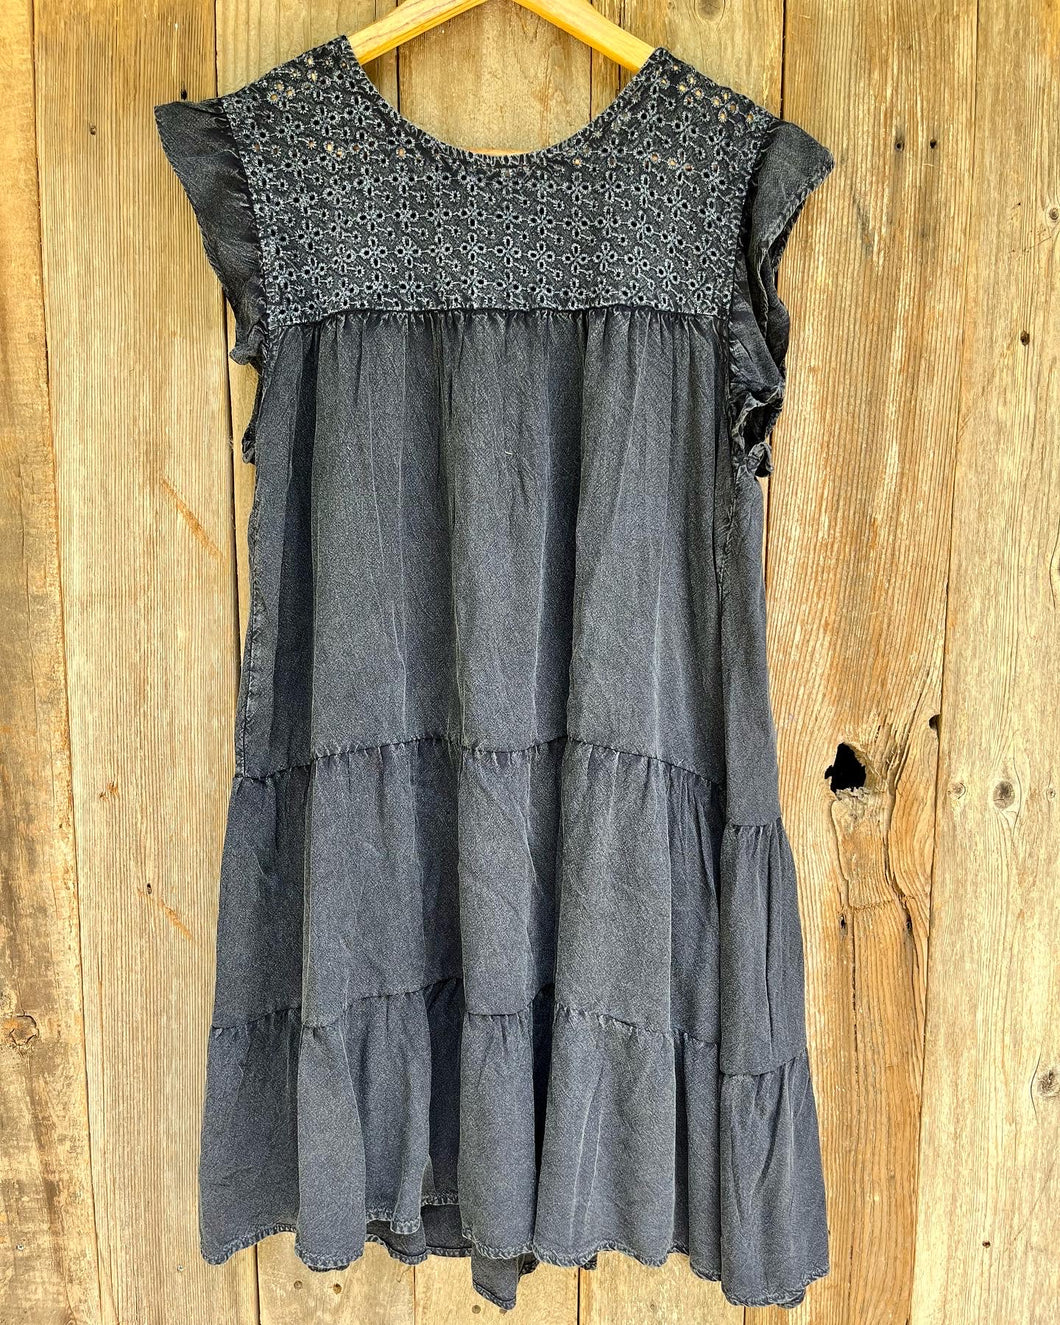 Knit charcoal dress